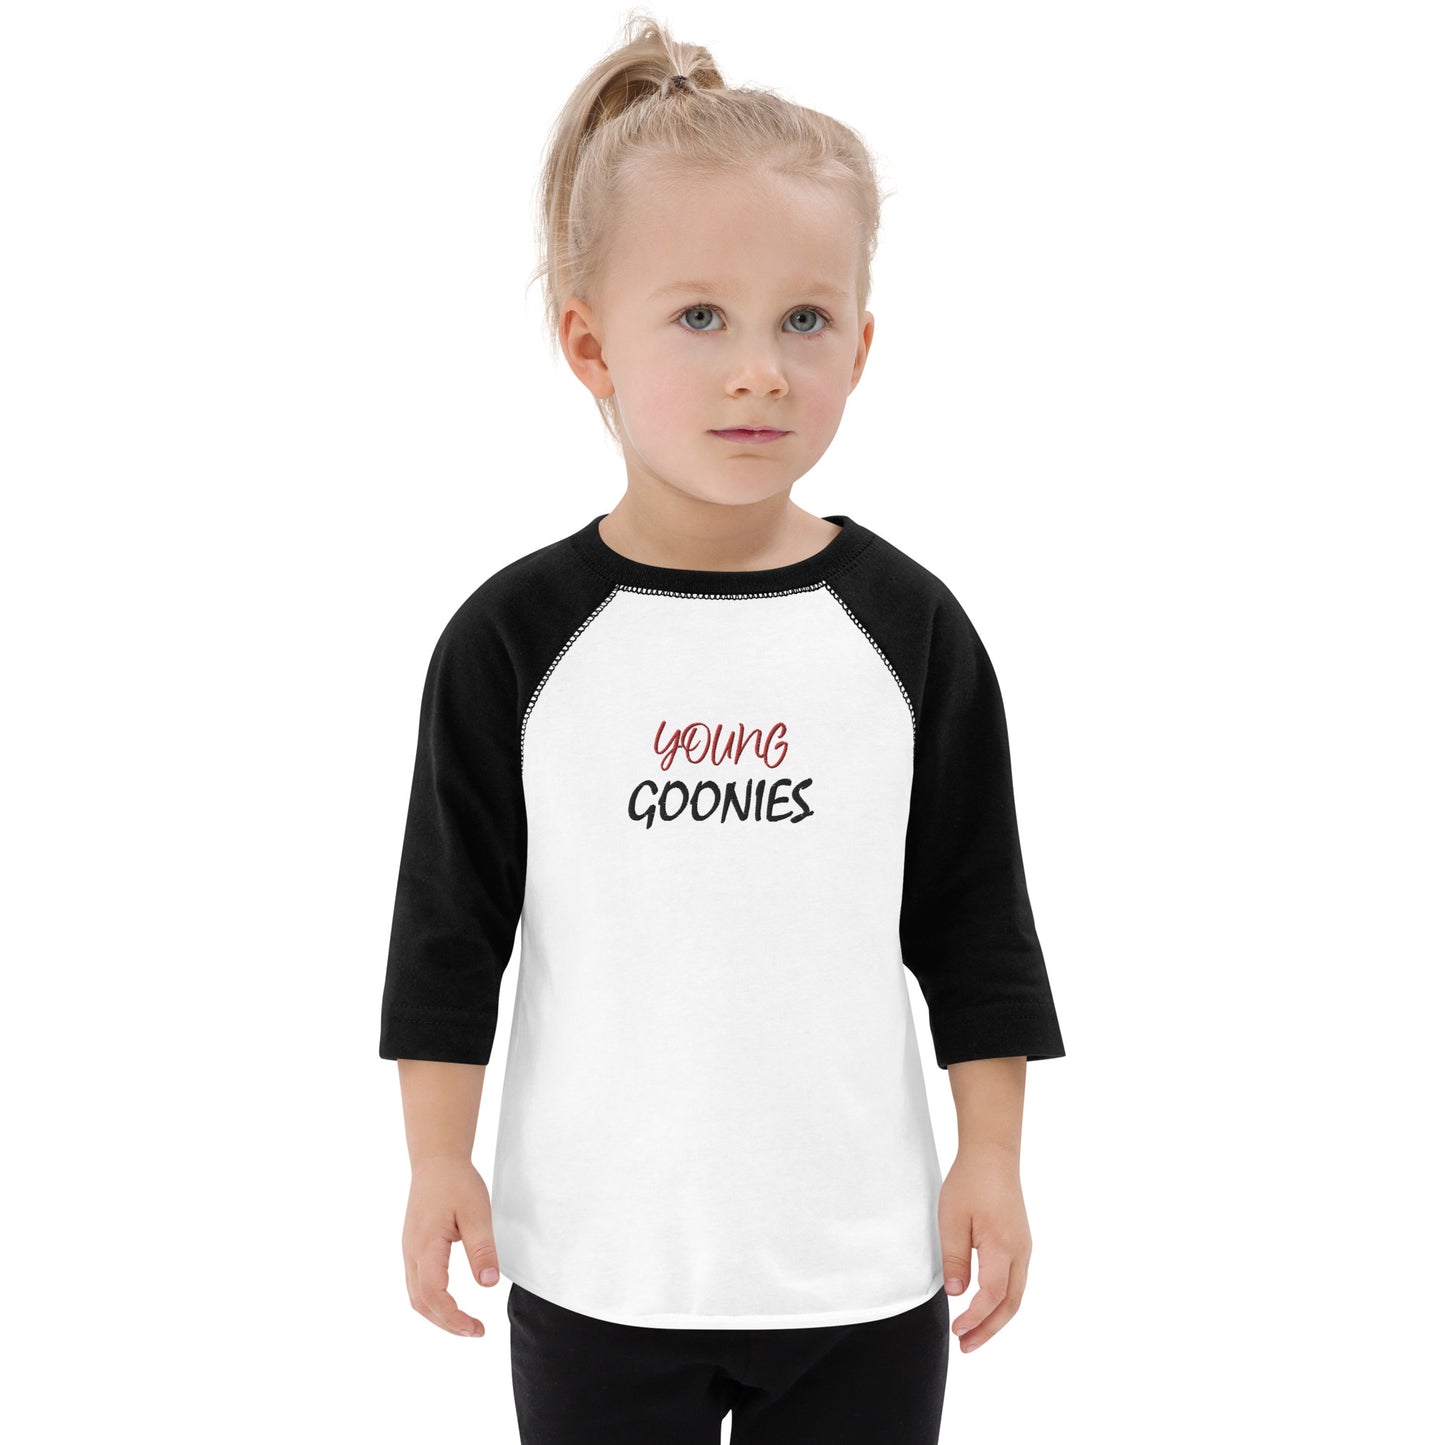 YOUNG GOONIES Toddler baseball shirt